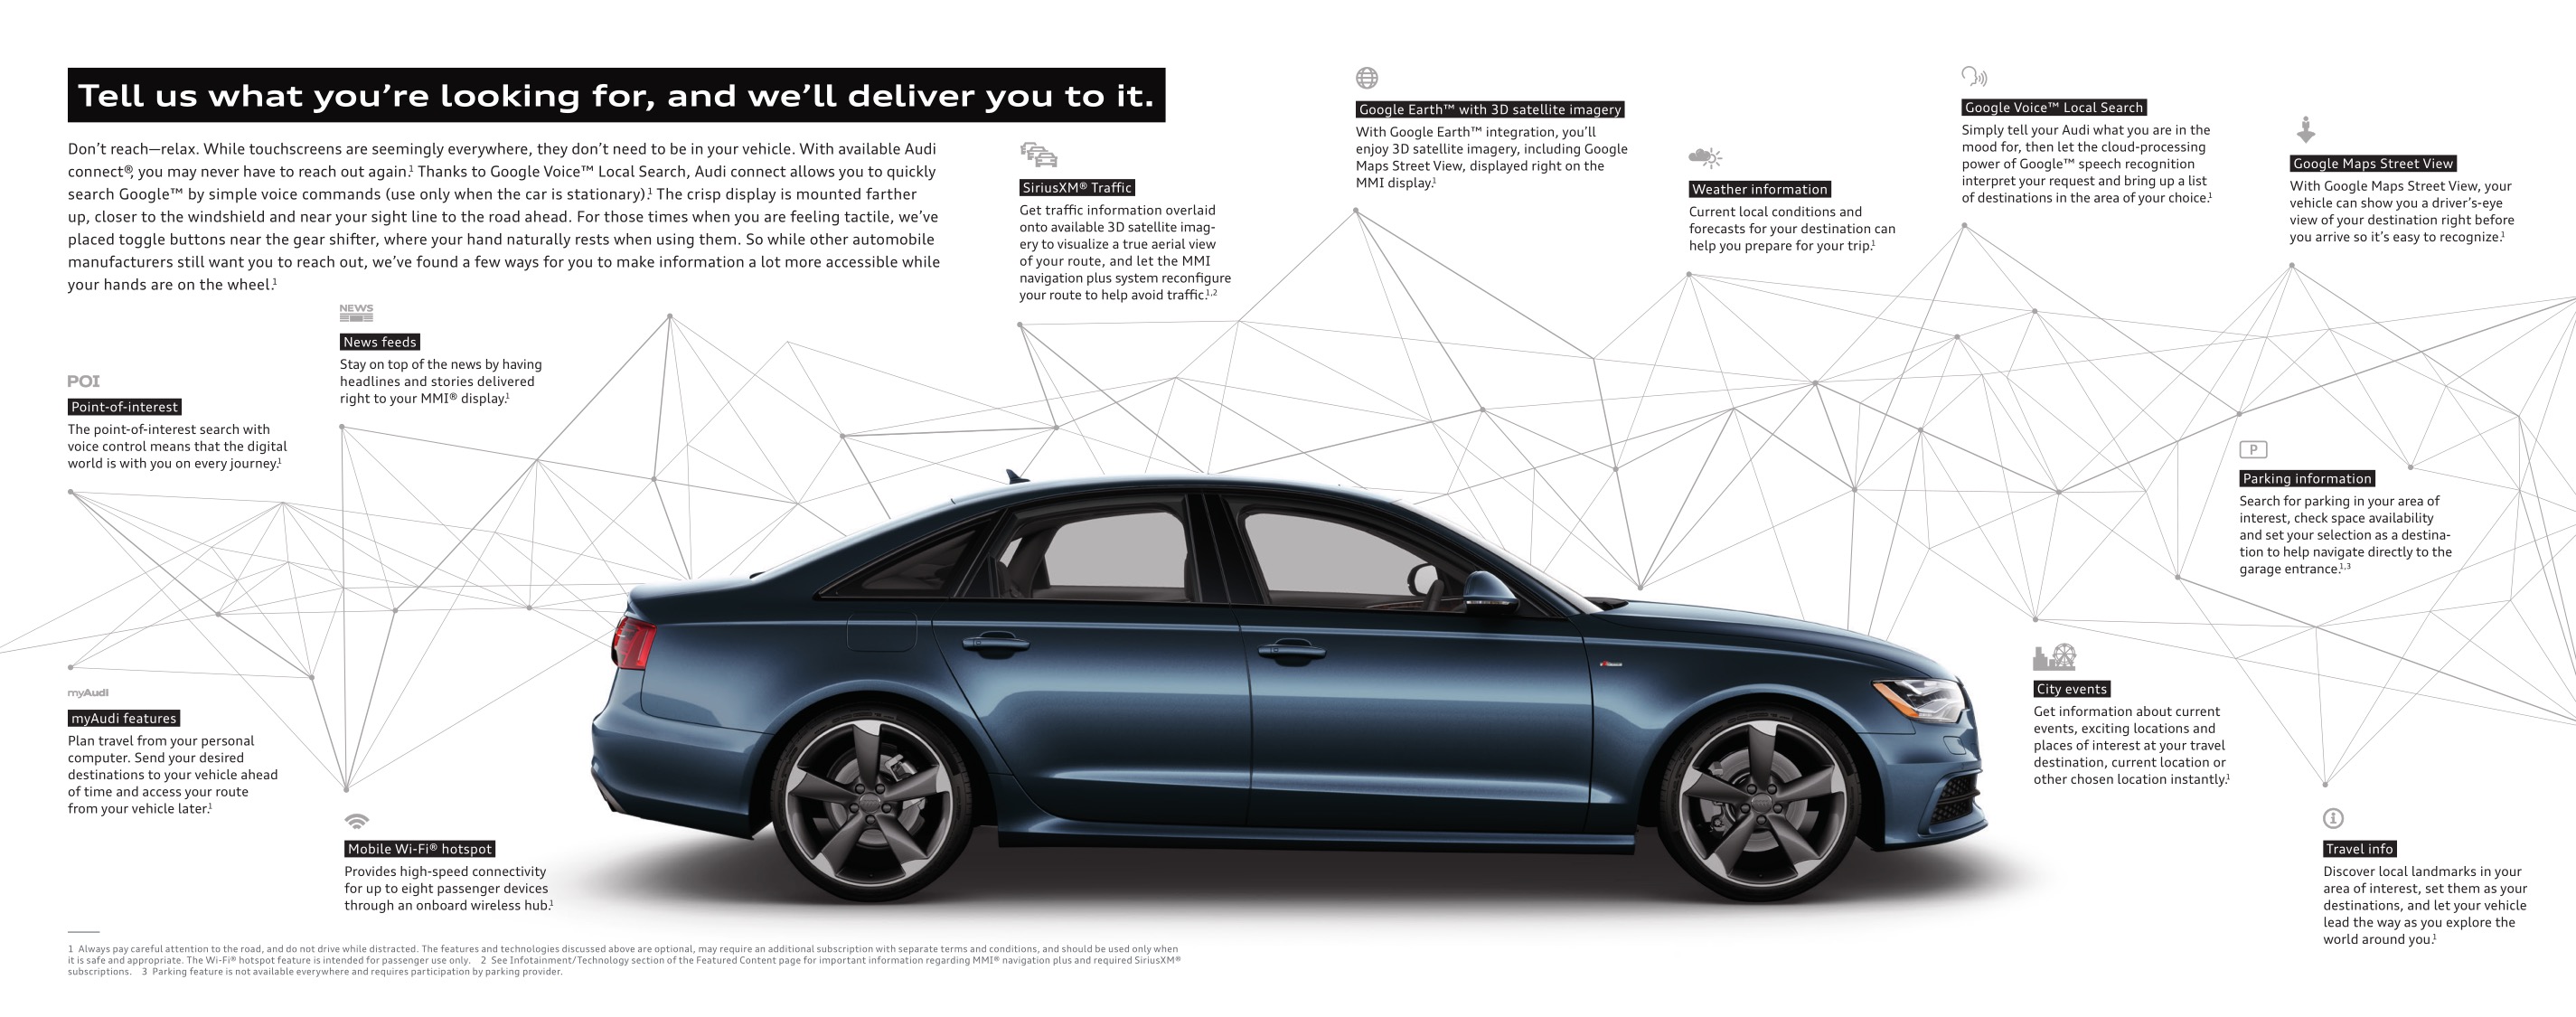 2015 Audi A6 Brochure Page 6